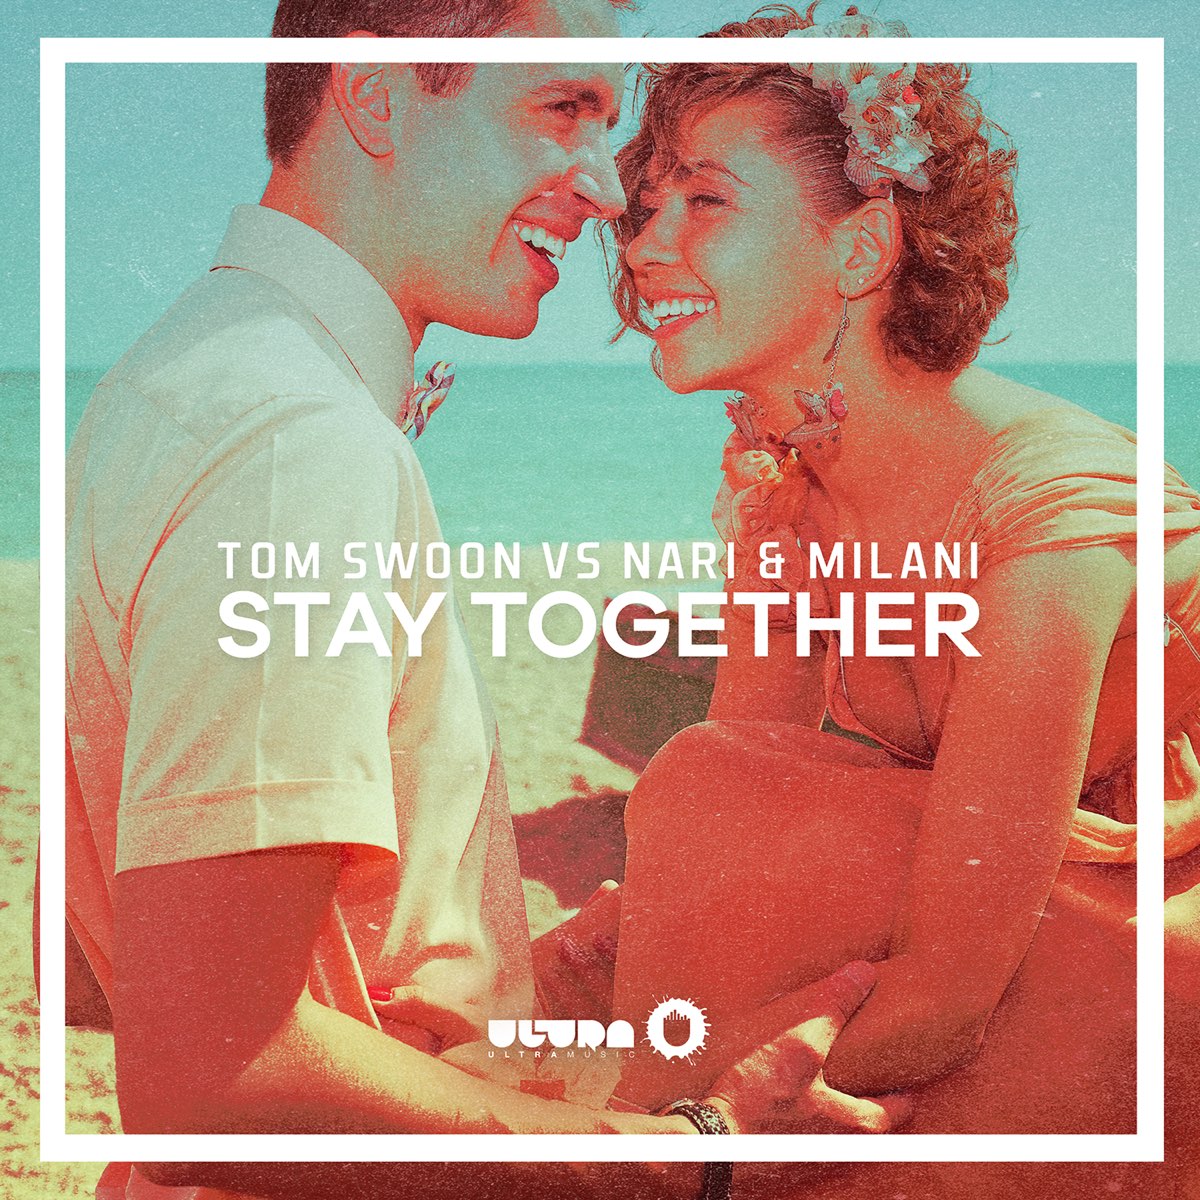 Stay together. Swoon перевод. You and i together песня